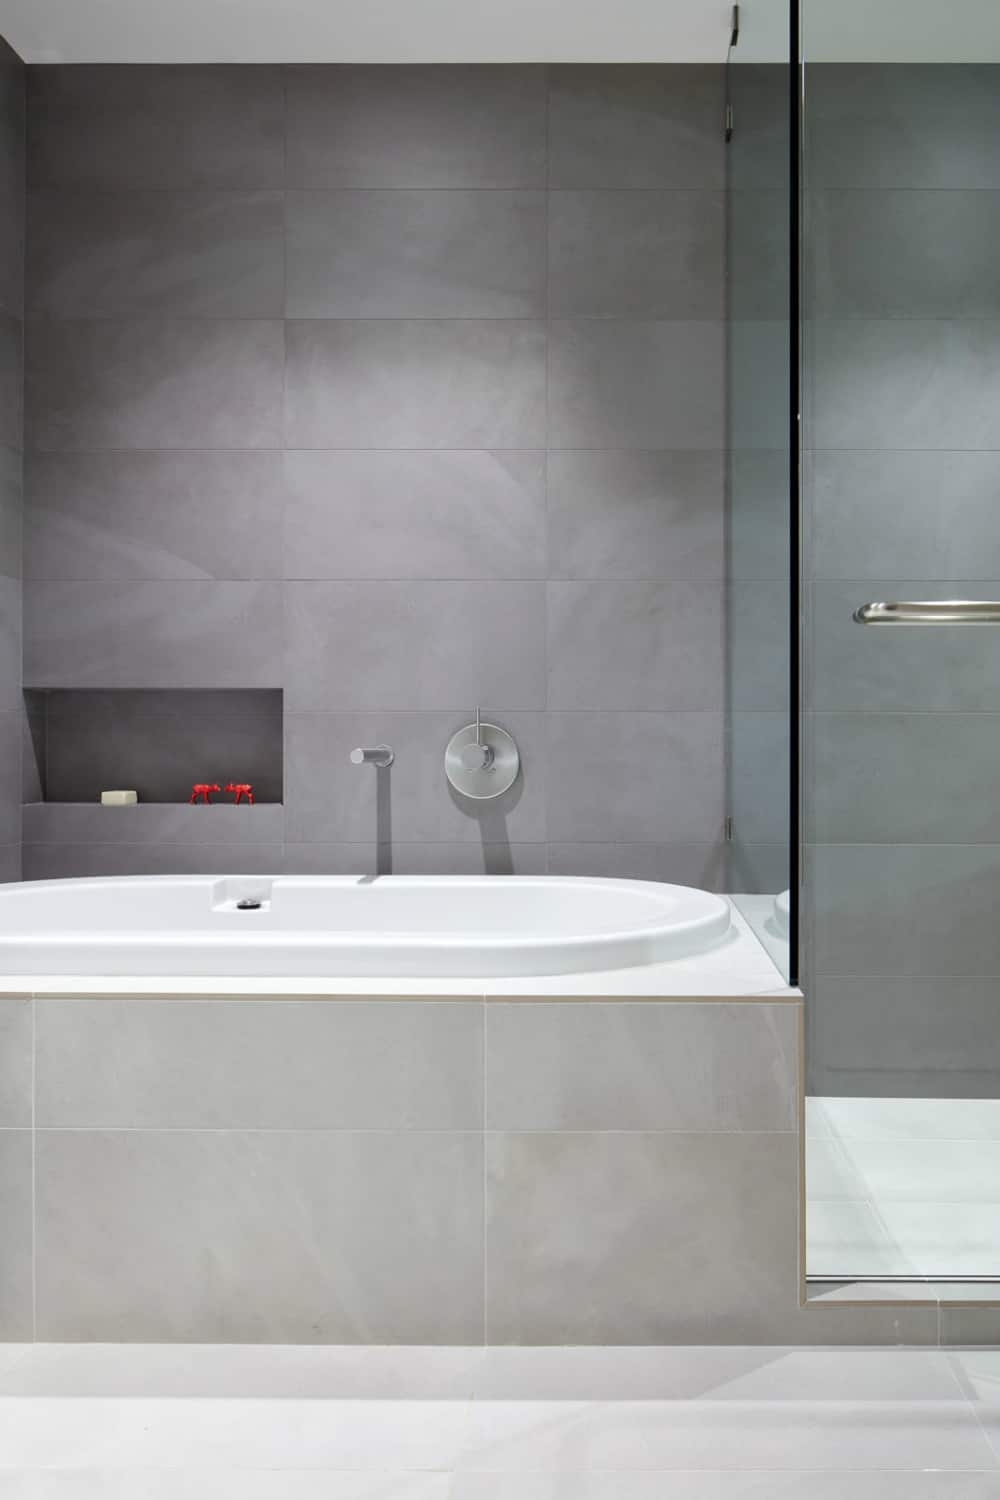 Modern minimalist bathroom features a bathtub and a glass shower stall